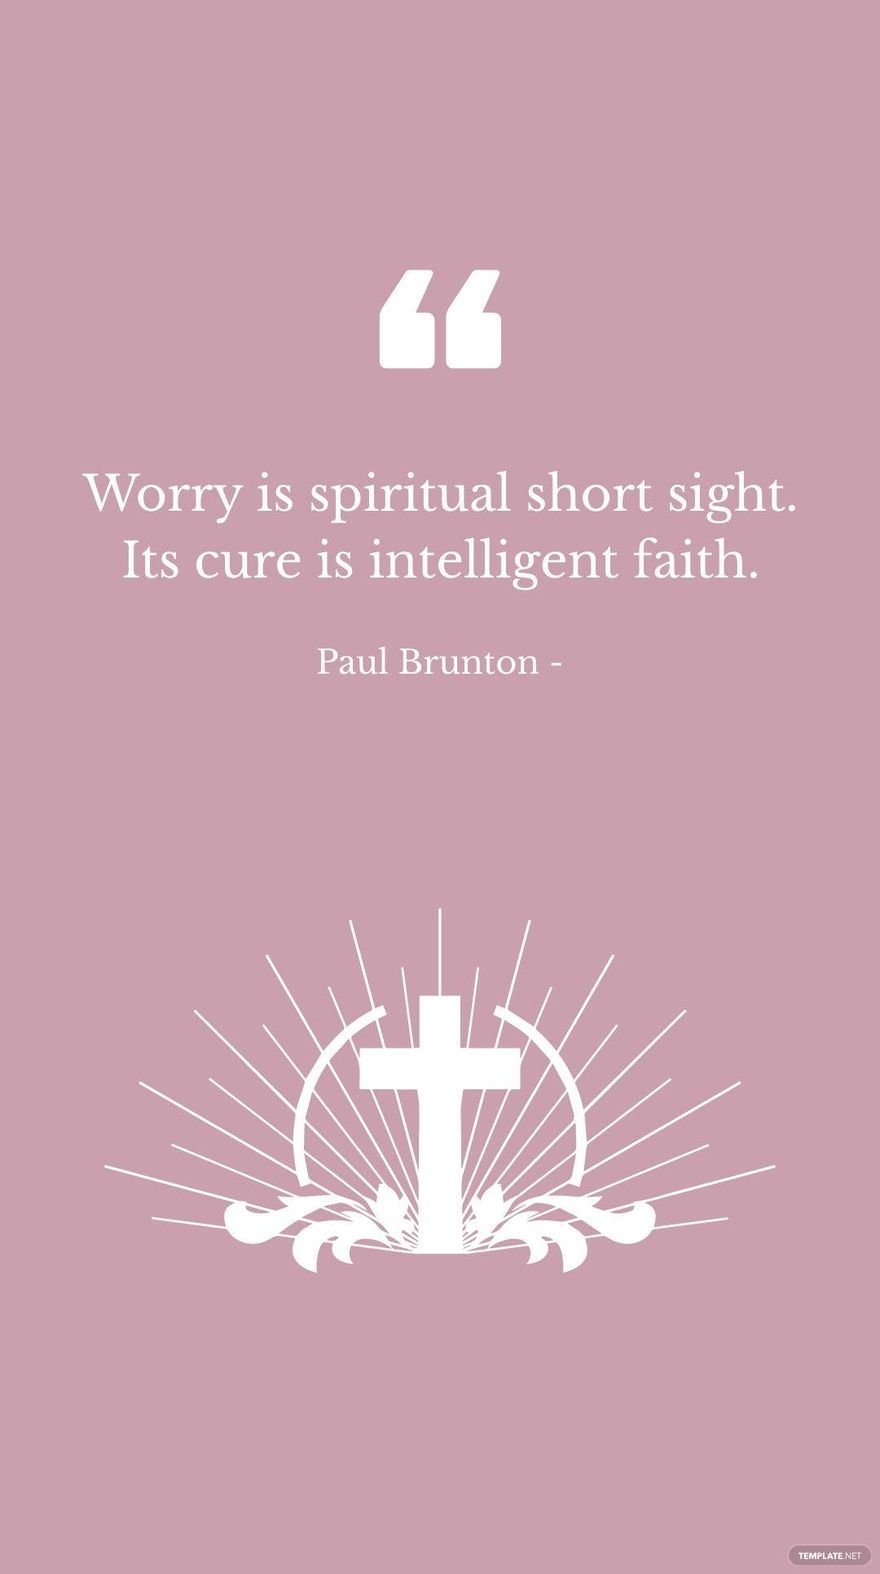 Paul Brunton - Worry is spiritual short sight. Its cure is intelligent faith.